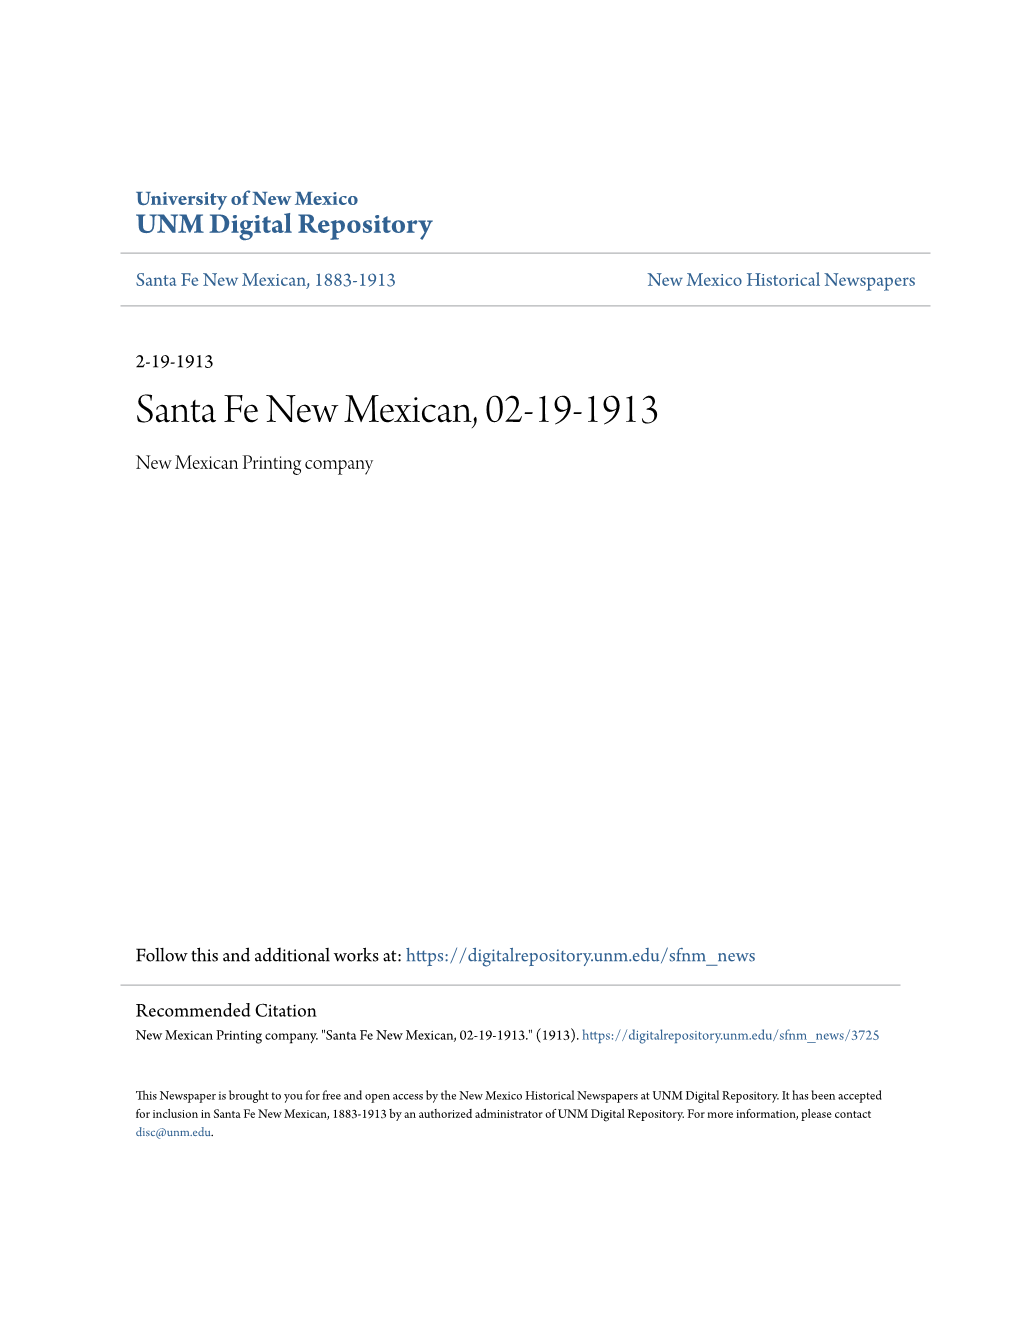 Santa Fe New Mexican, 02-19-1913 New Mexican Printing Company